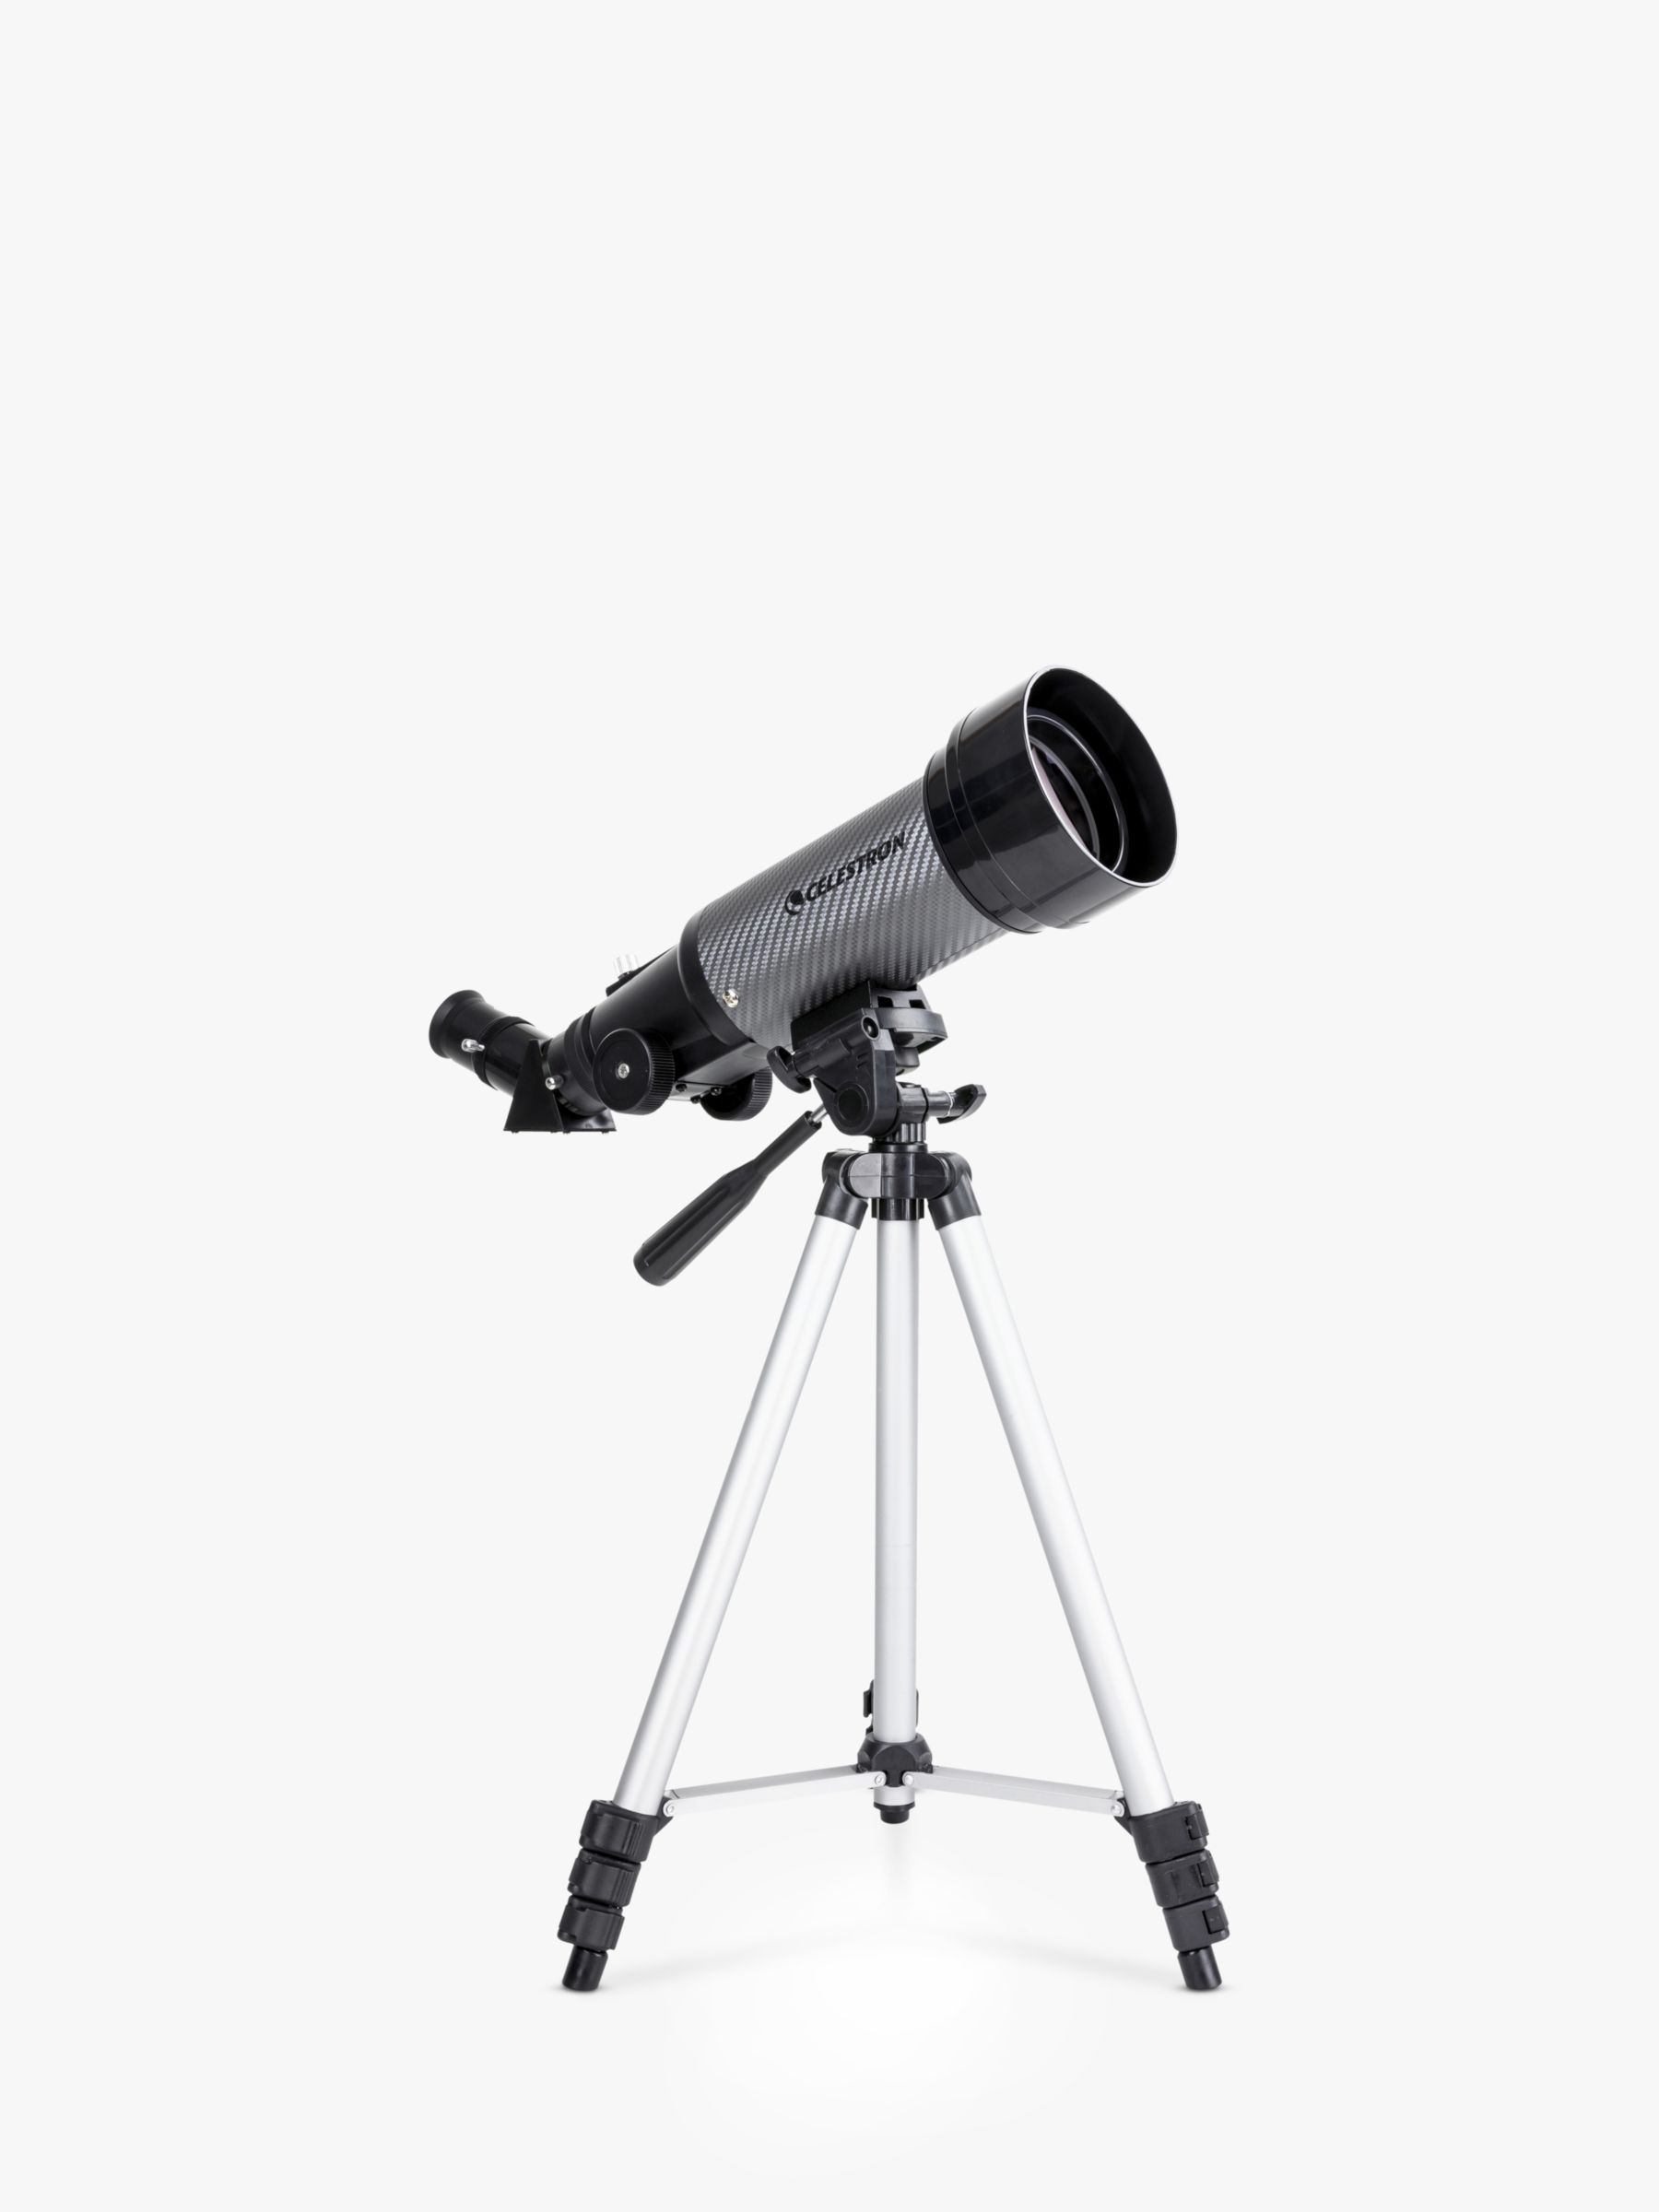 travel scope 70 portable telescope price